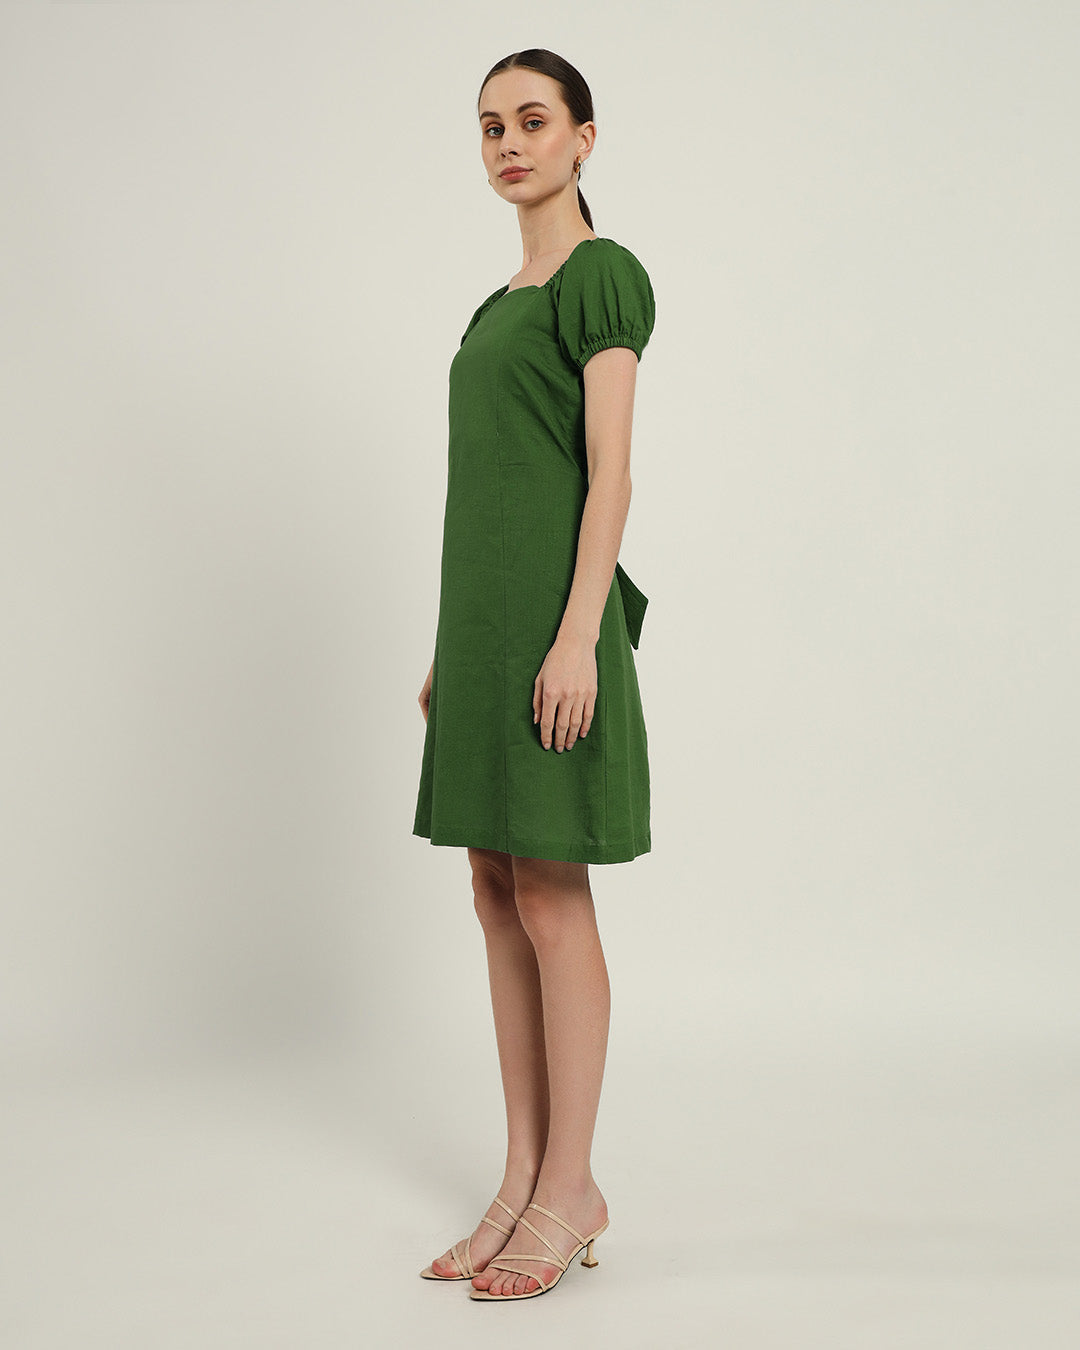 The Arar Emerald Dress